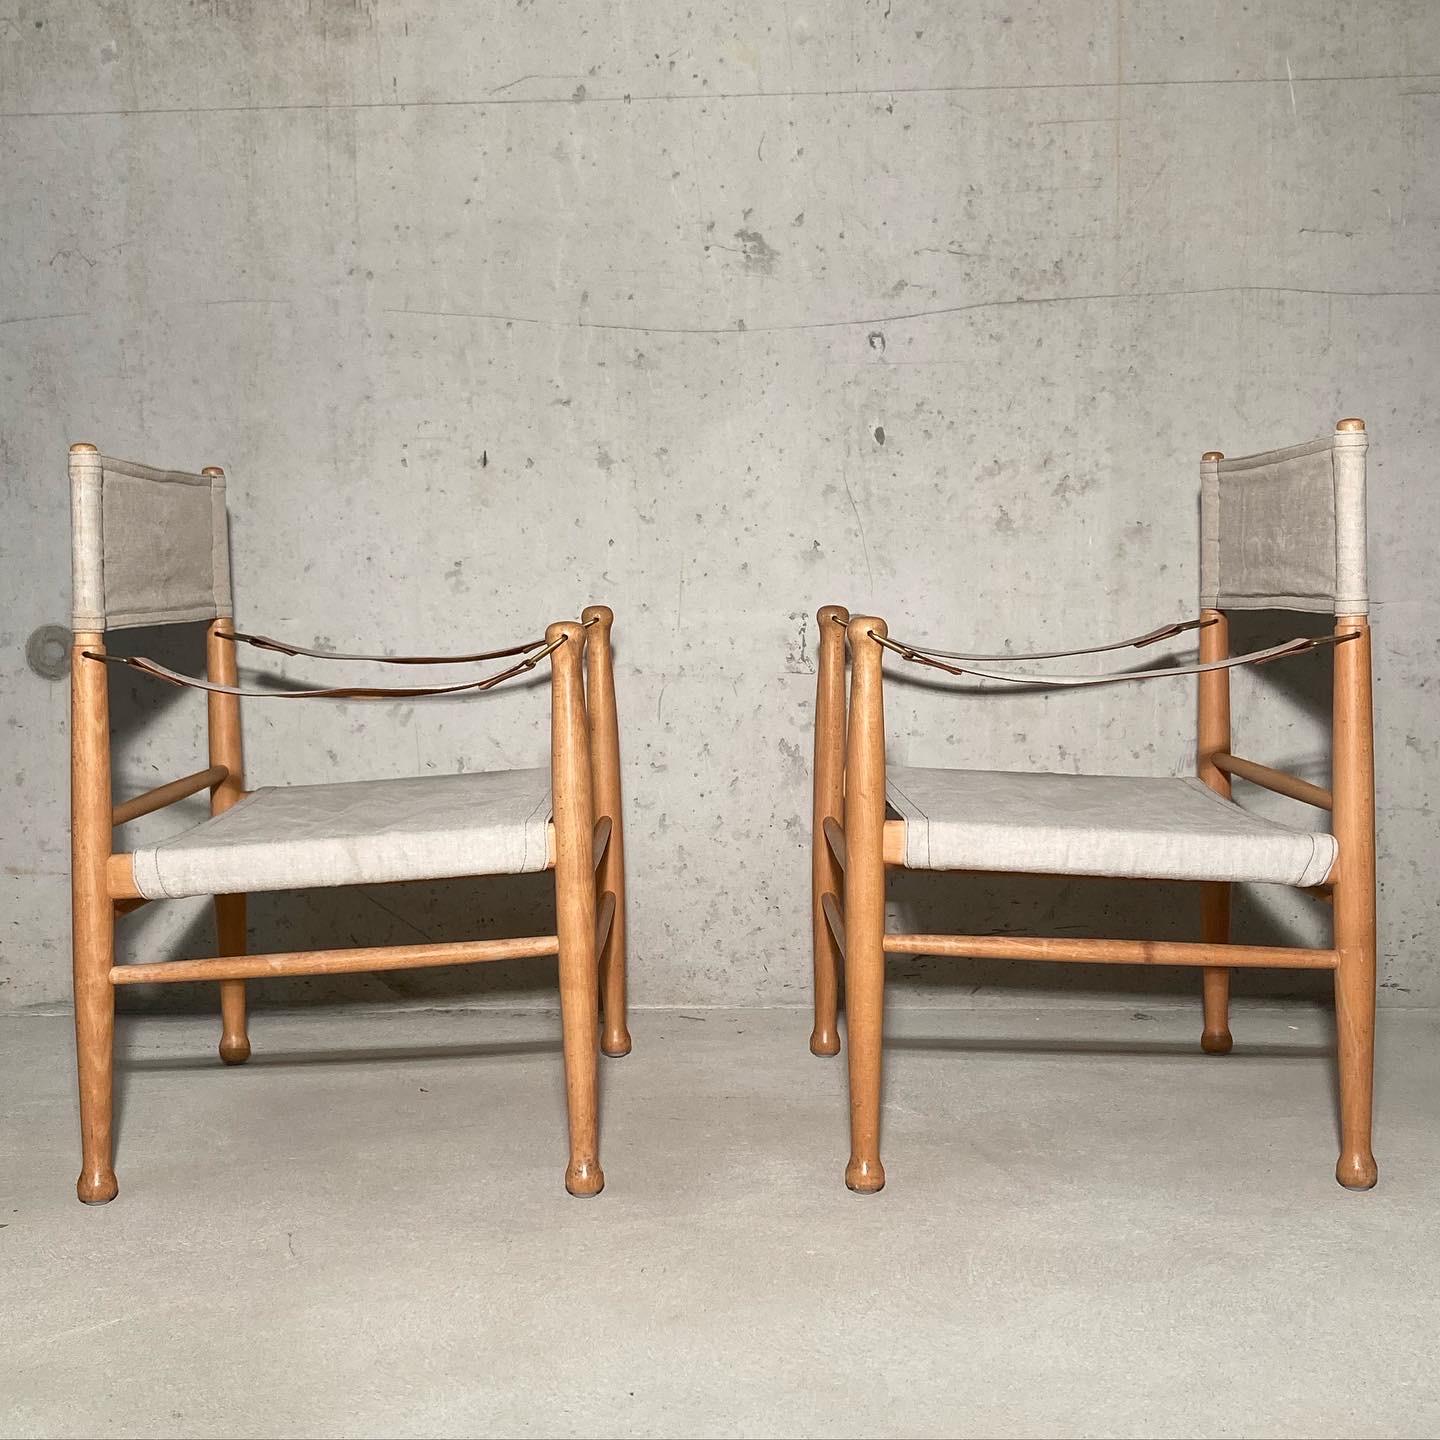 Late 20th Century Pair of Midcentury Farstrup Safari Chairs 1970s Denmark